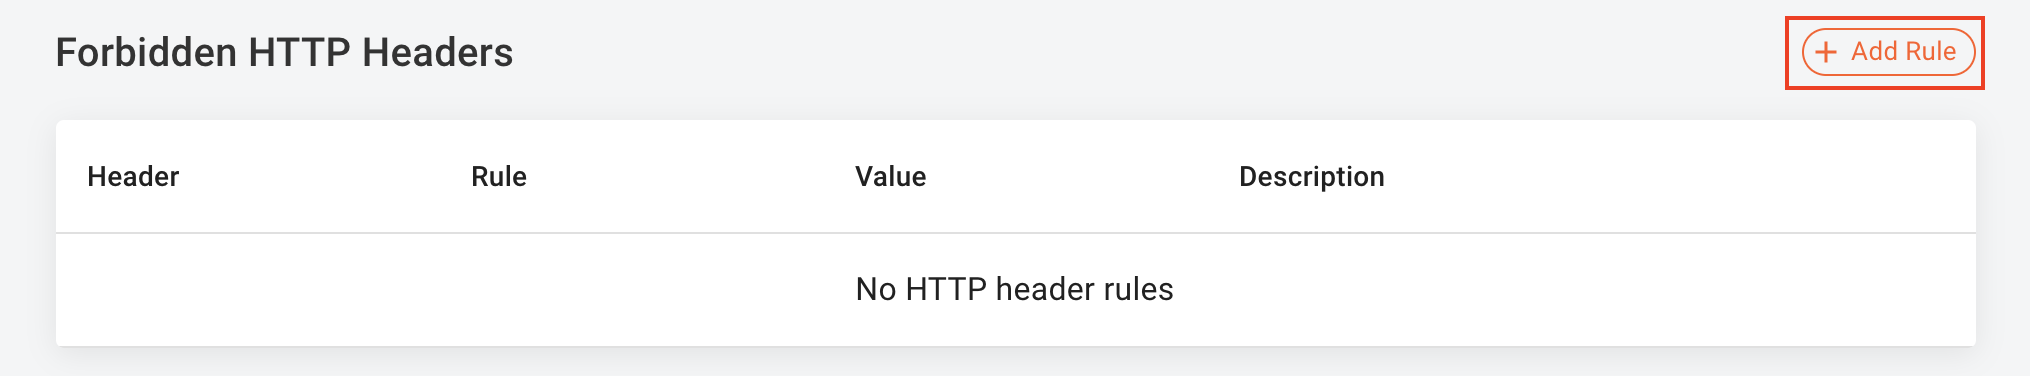 Screenshot of where to configure forbidden HTTP headers in the FingerprintJS dashboard